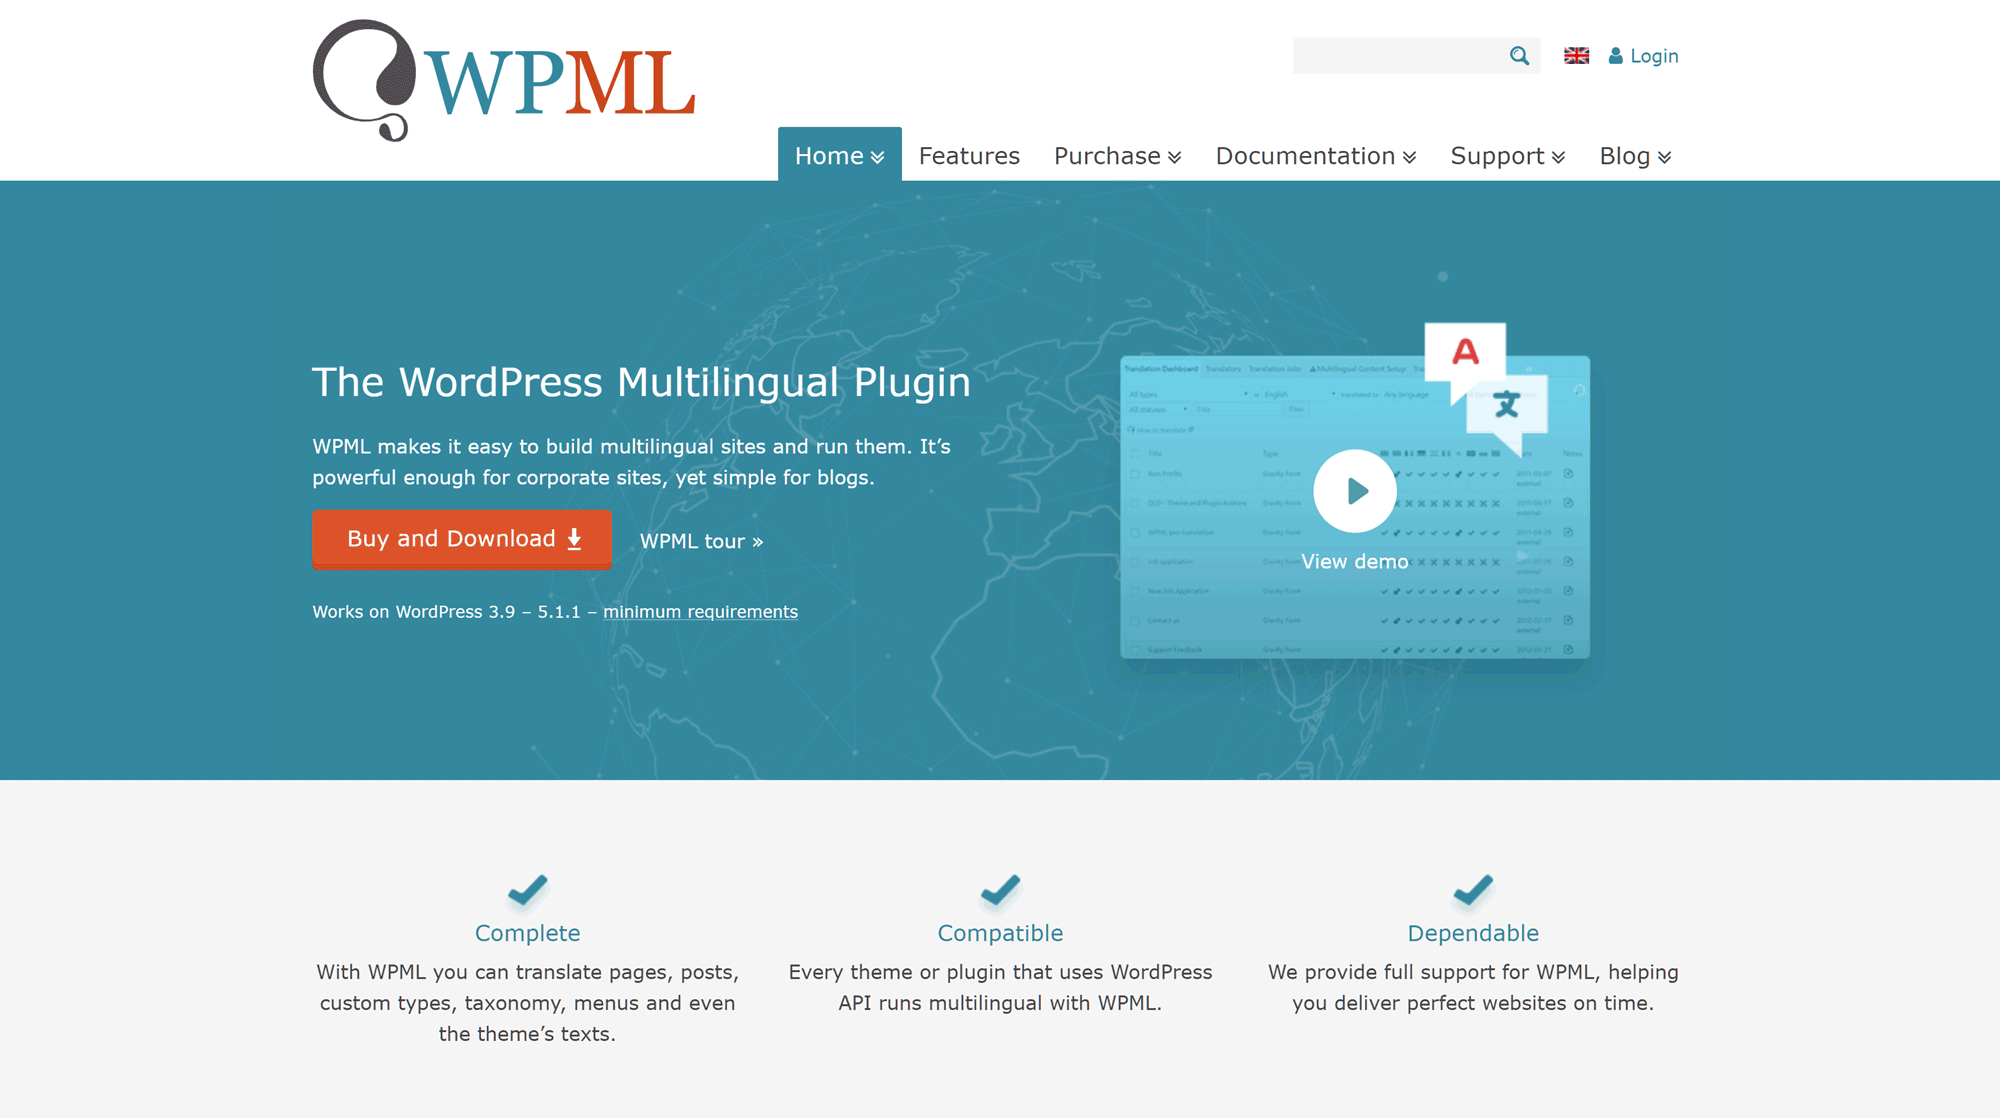 WPML Multilingual Plugin Comparison